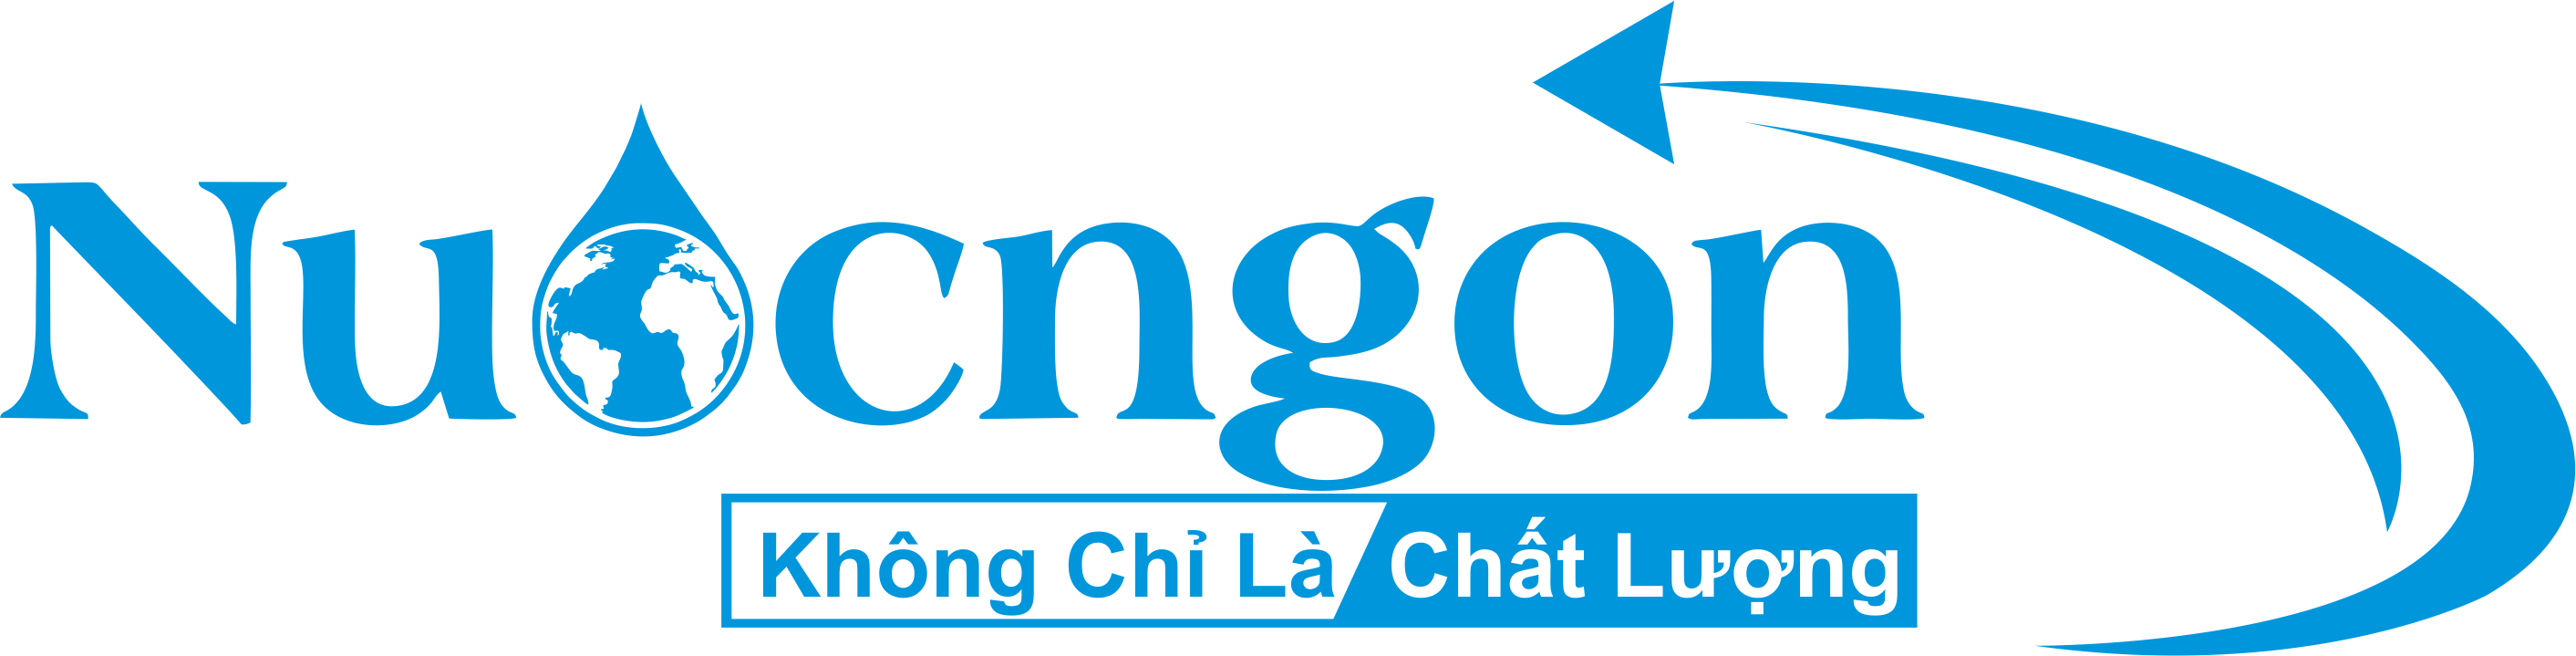 Nuocngon.com Hồ Chí Minh